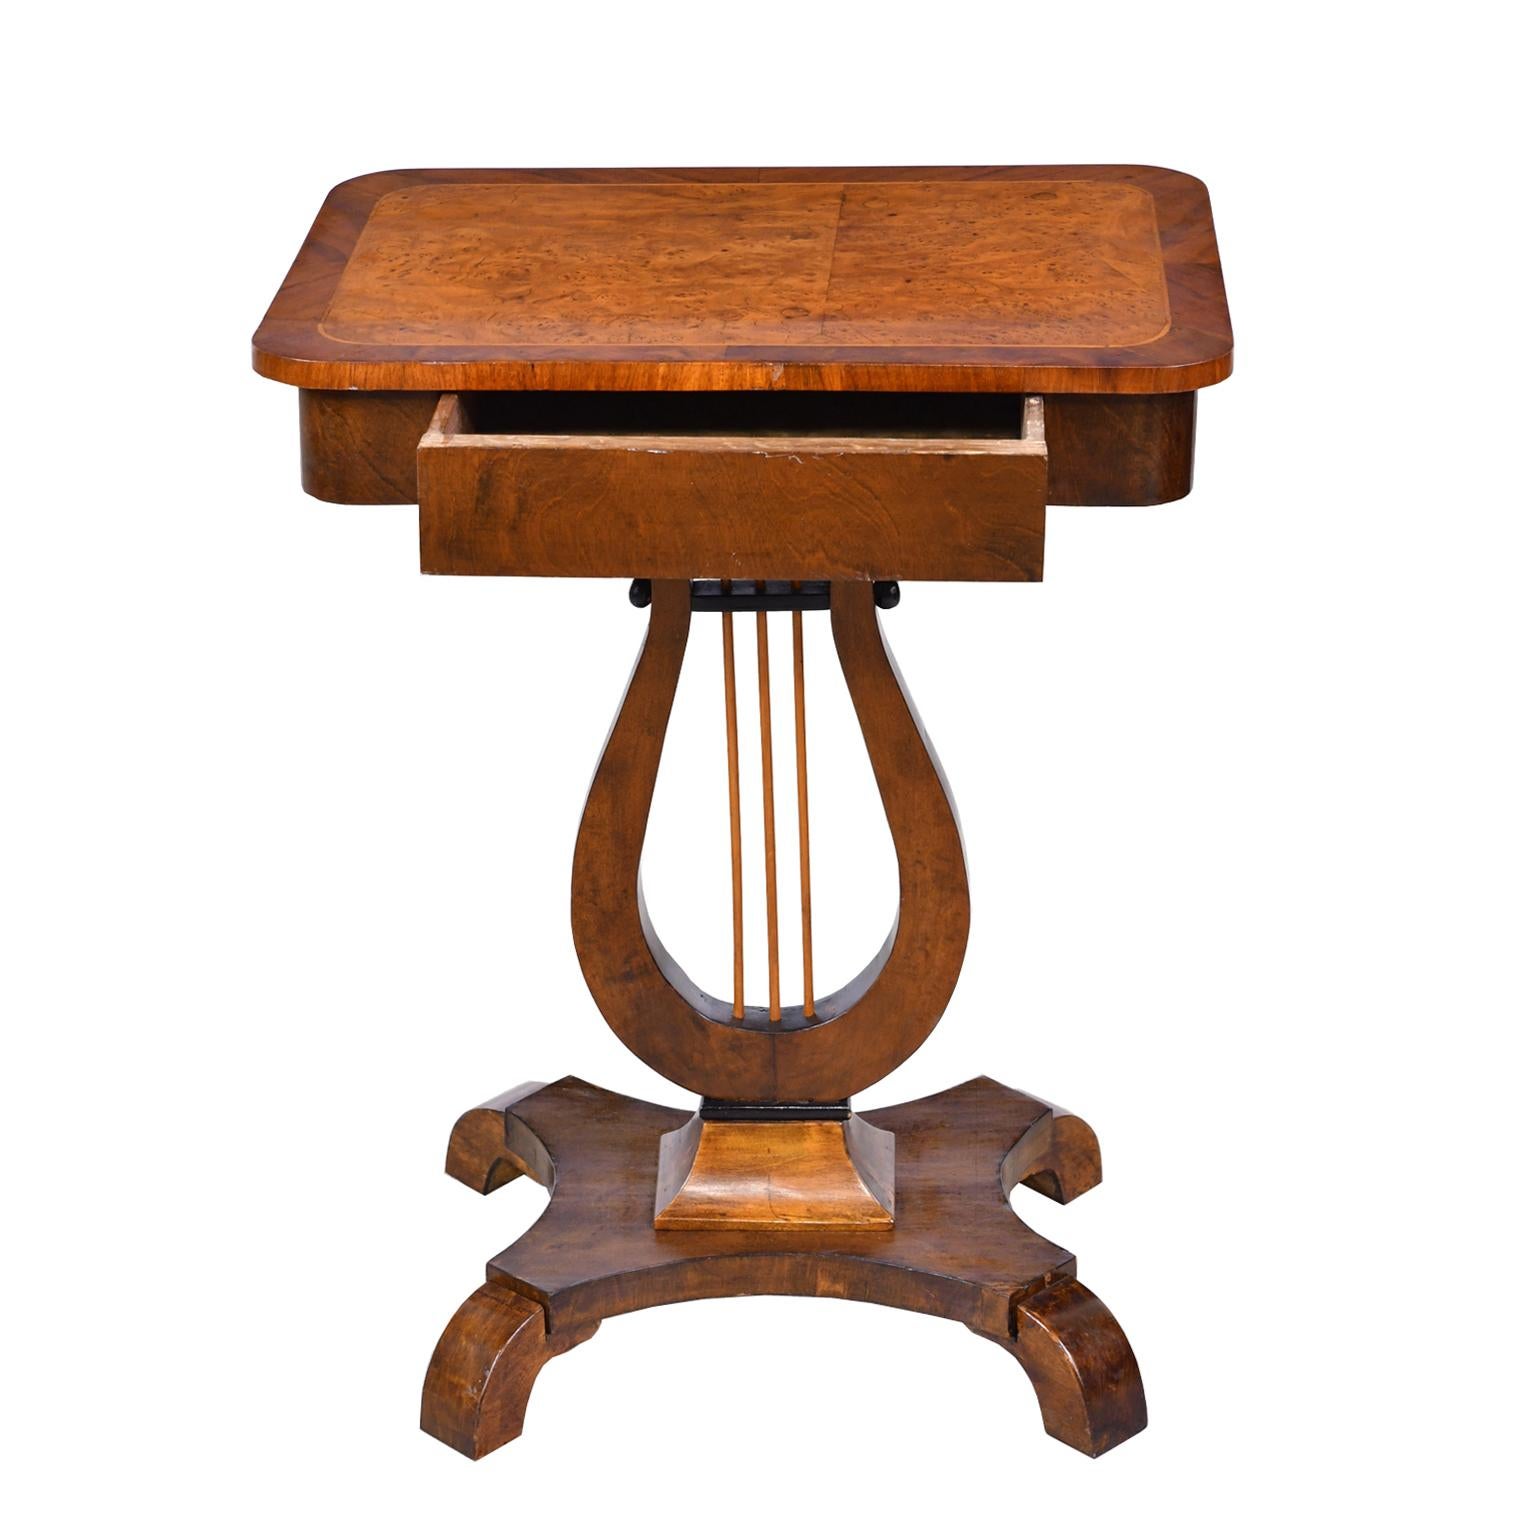 Swedish Karl Johan Salon Table in Birchwood with Lyre Pedestal, Sweden, circa 1820 For Sale